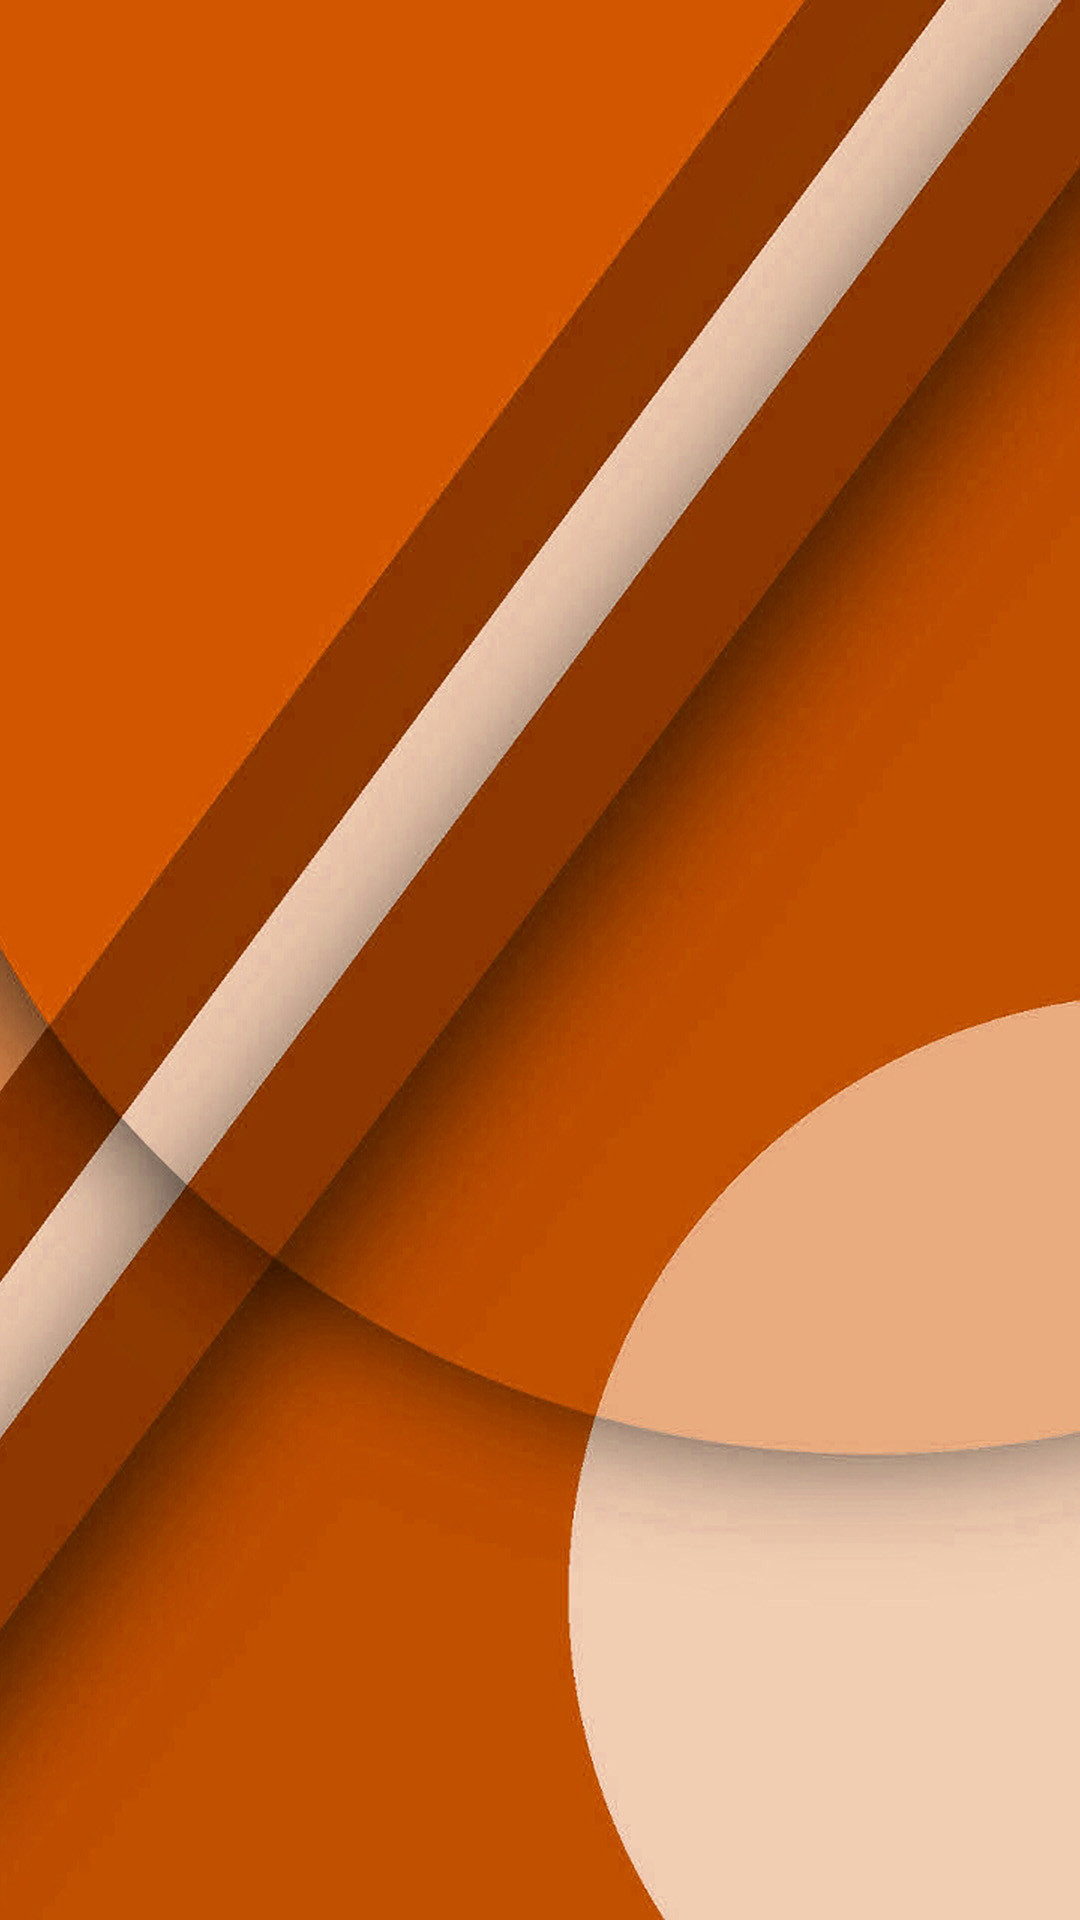 Free download Burnt Orange Wallpaper - [1080x1920] for your Desktop, Mobile & Tablet. Explore Orange Feather Wallpaper. Orange Feather Wallpaper, Rainbow Feather Wallpaper, Feather Flower Wallpaper